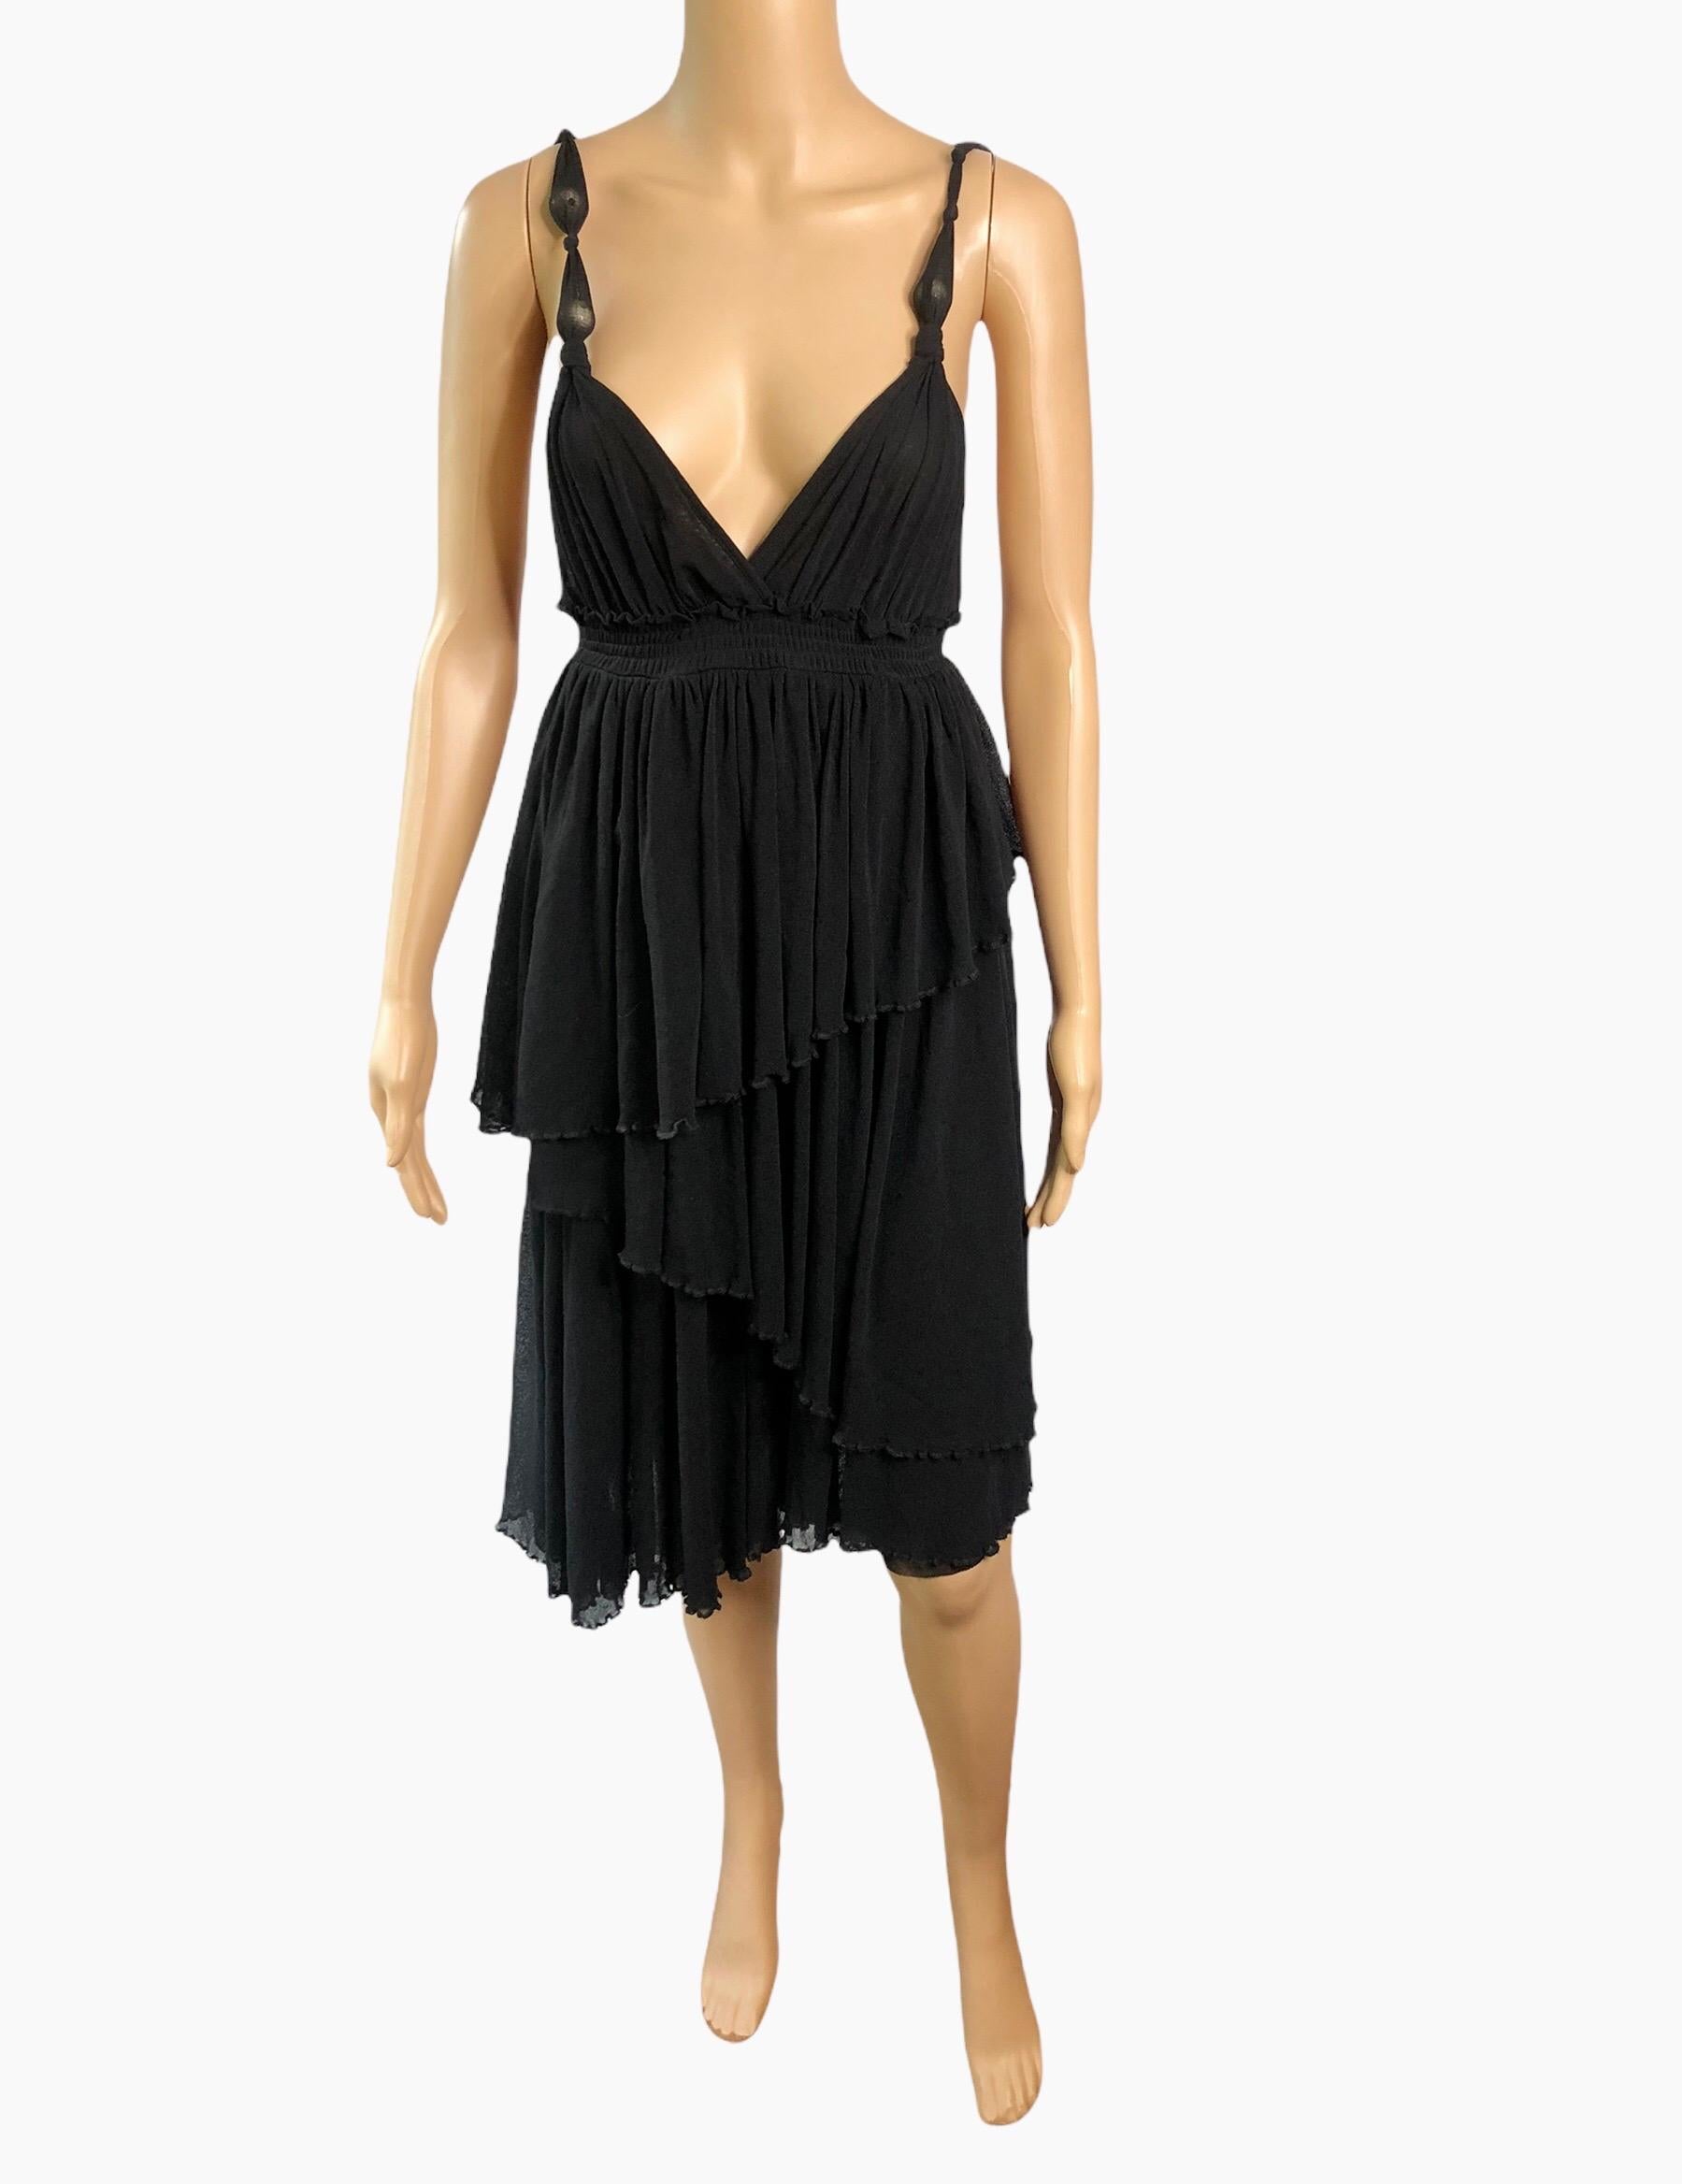 Jean Paul Gaultier Soleil Unworn Backless Semi Sheer Mesh Black Dress For Sale 2